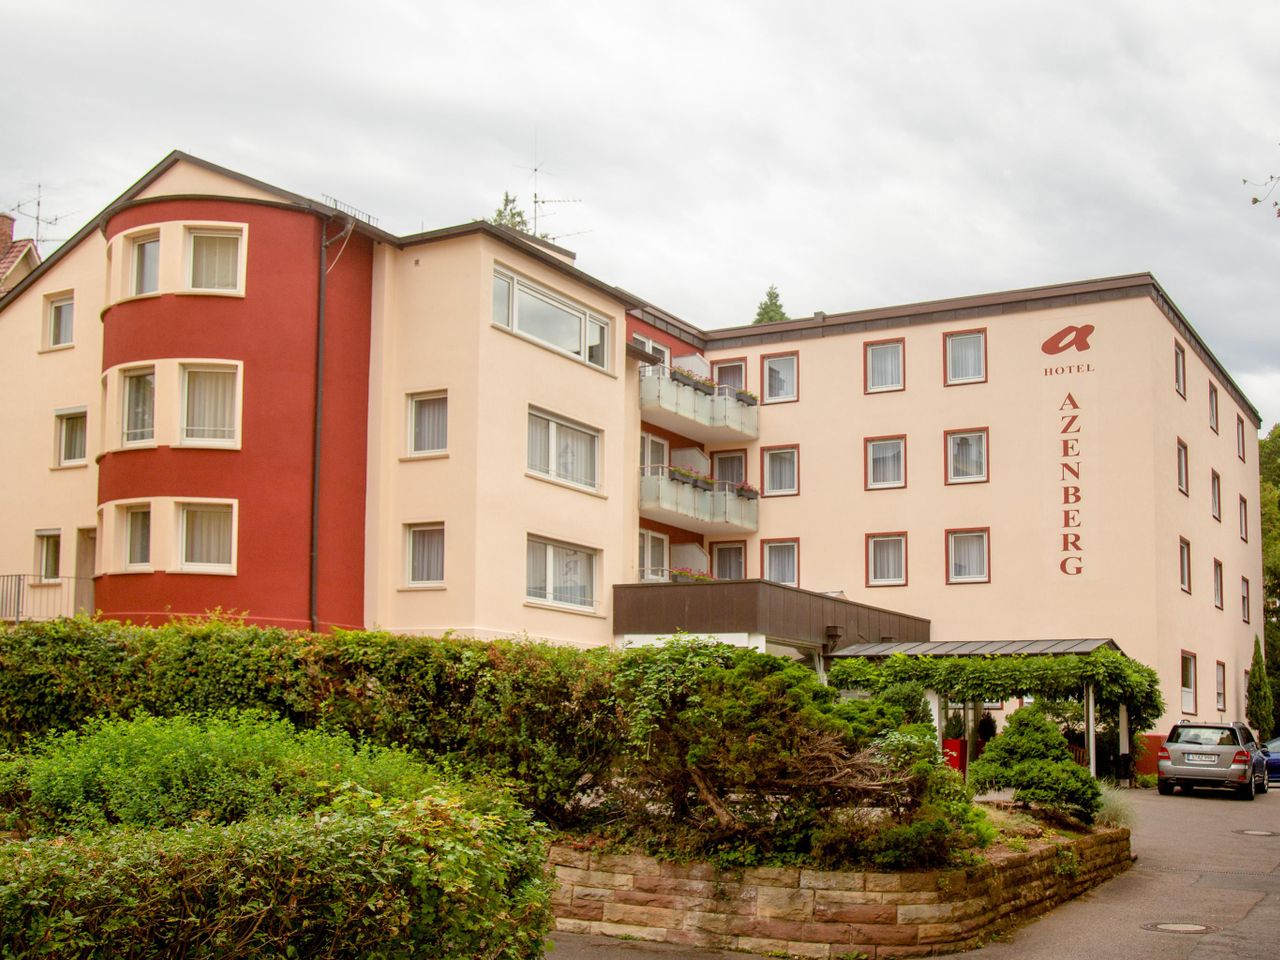 5 Tage im Hotel Azenberg Stuttgart 